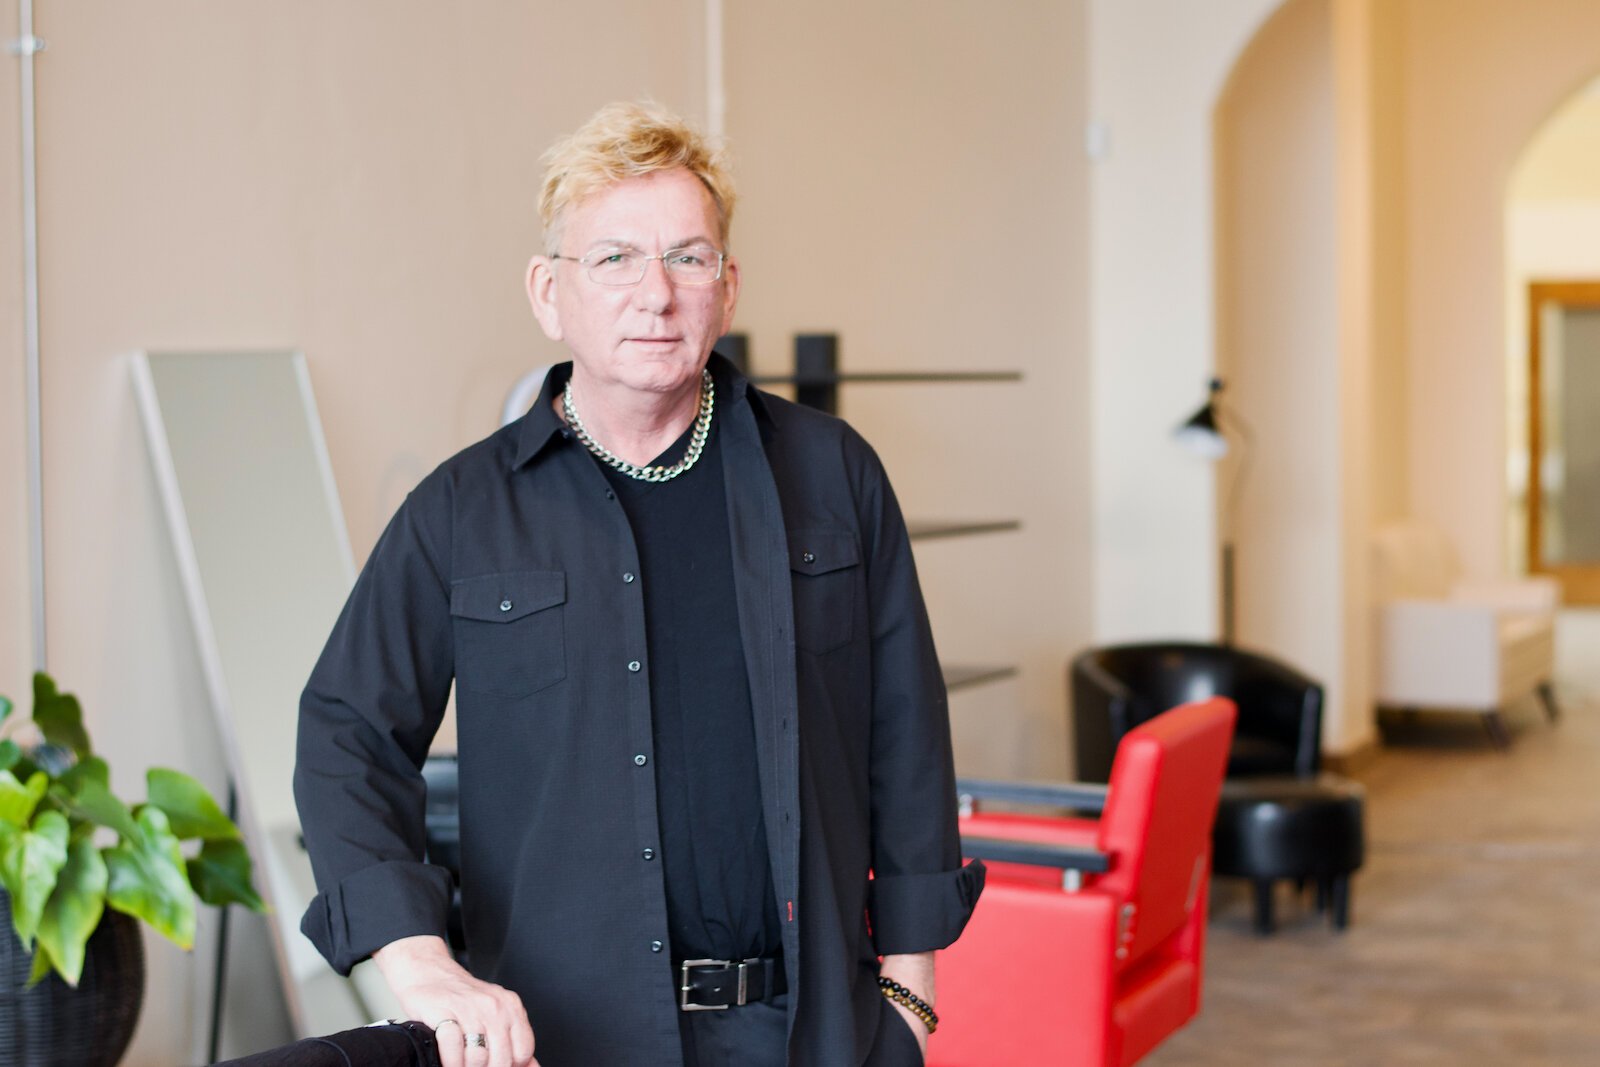 Michael Schram opens Fort Wayne’s “most eco-friendly salon”